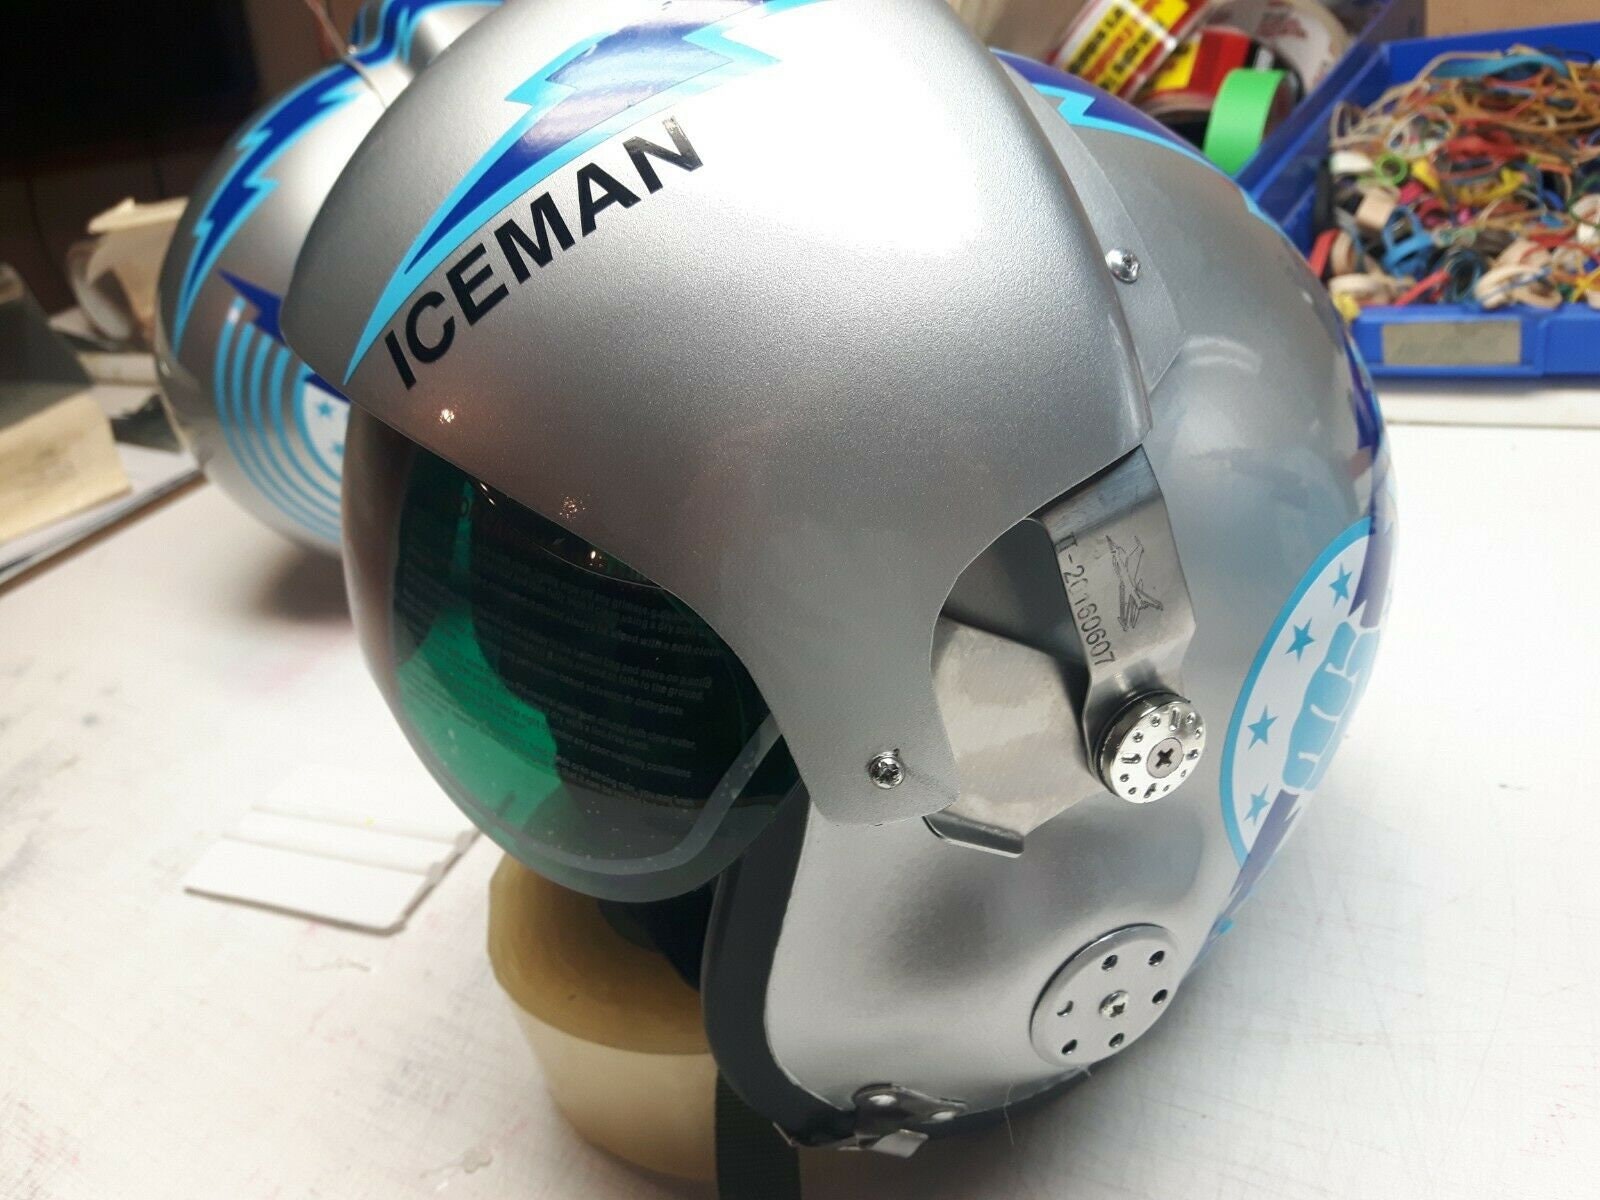 Top Gun Maverick Helmet Replica